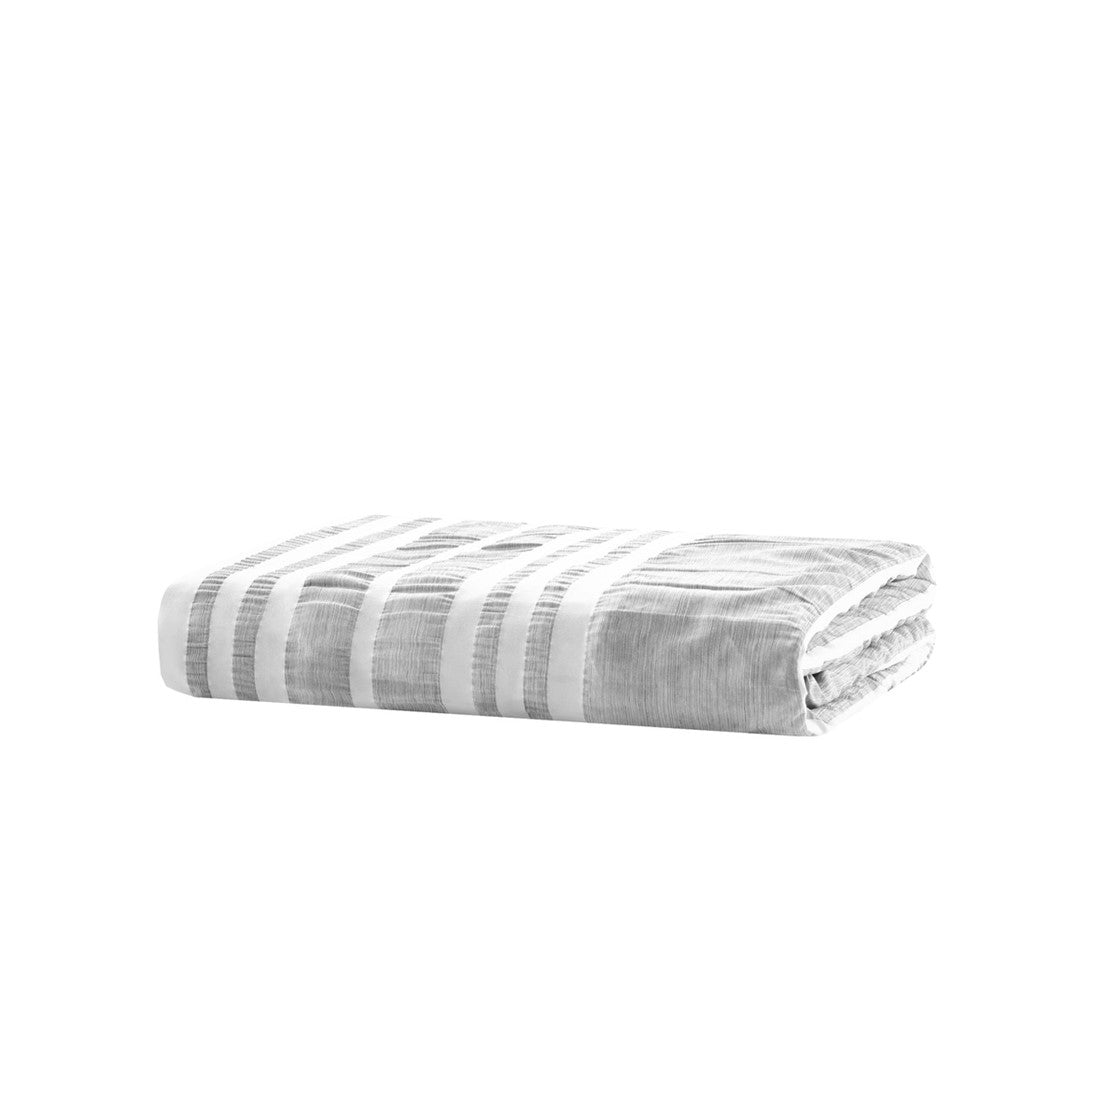 Lumi Striped Duvet Cover Set